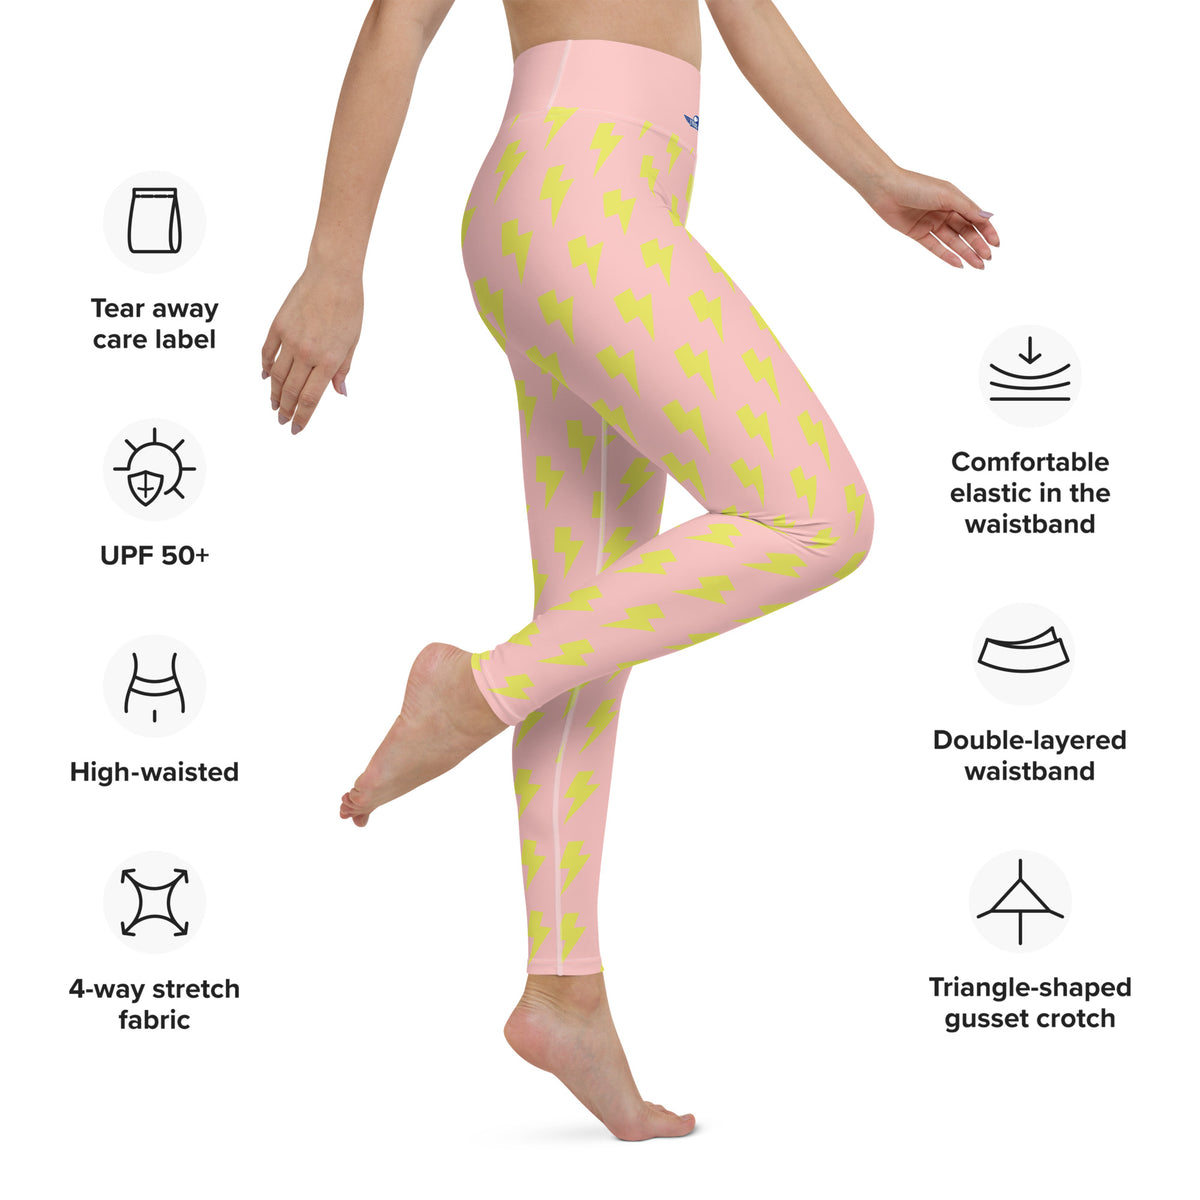 TG Pink & Yellow Bolts Design Yoga Leggings